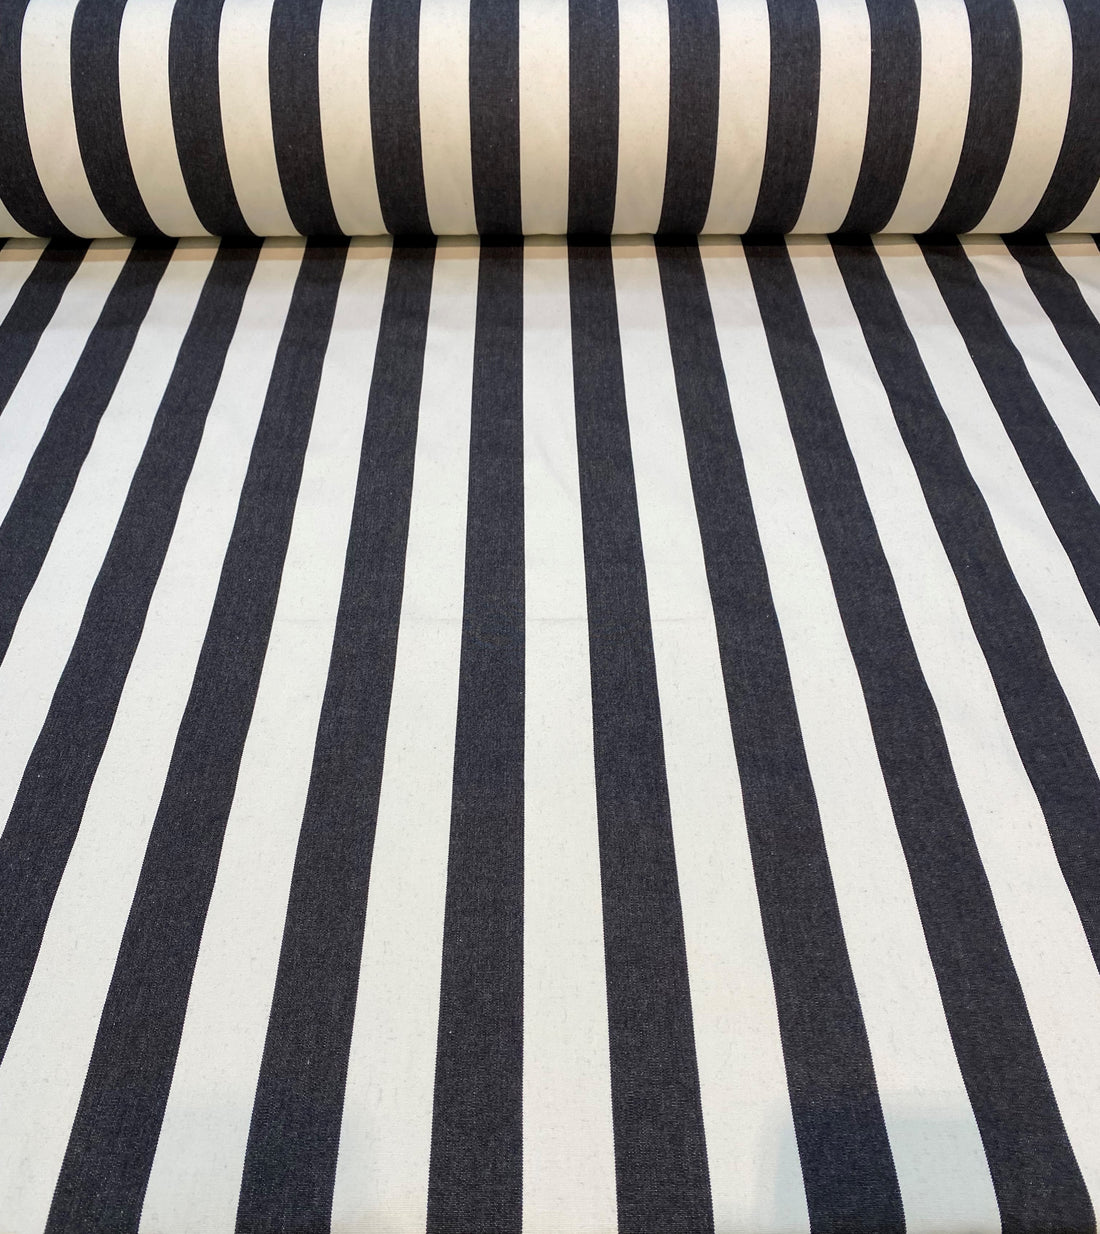  Black White Striped fabric